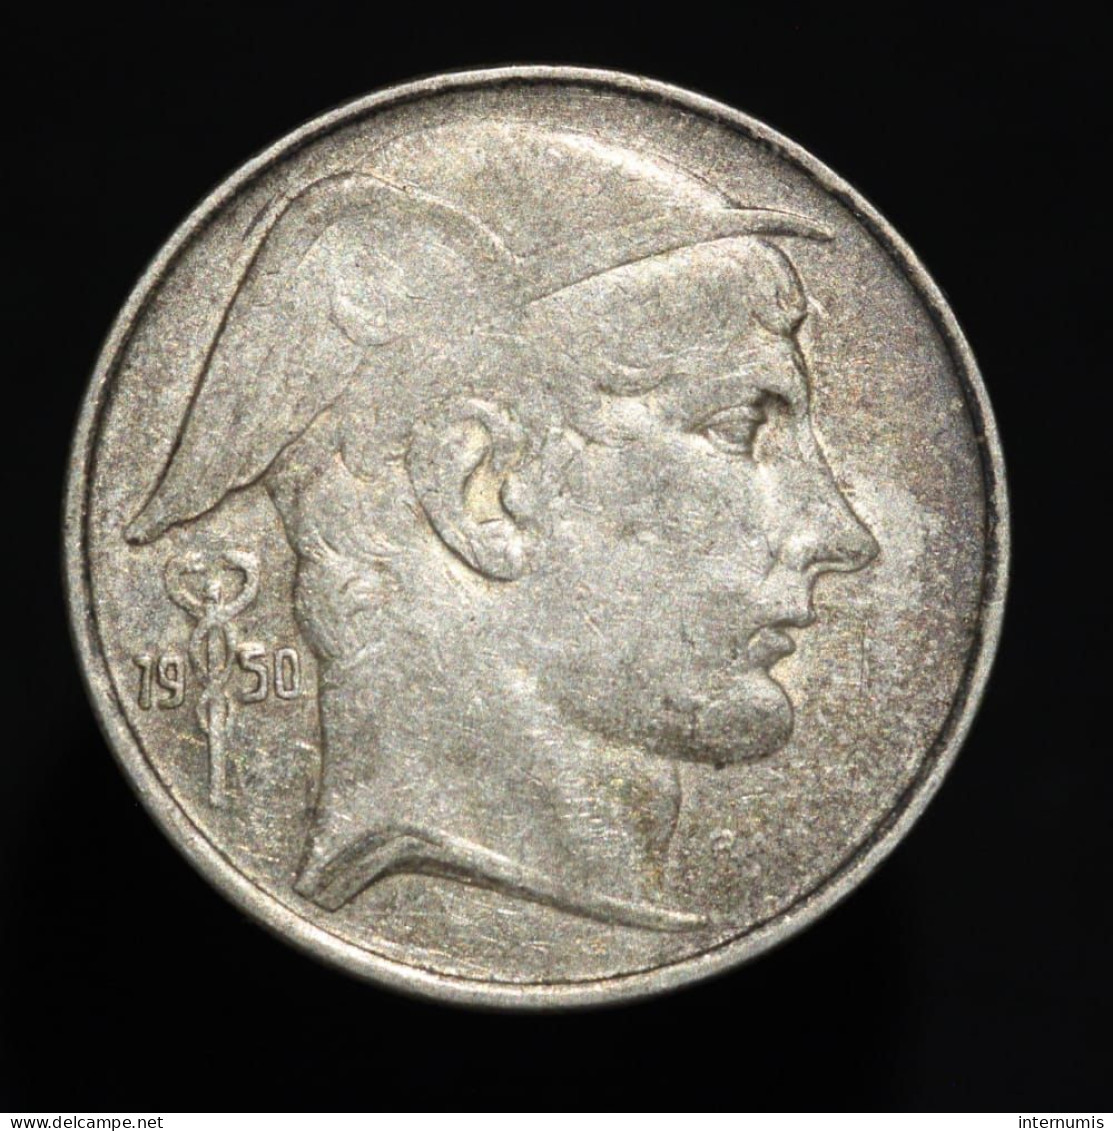 Belgique / Belgium, 20 Francs, 1950, Argent (Silver), TTB+ (EF), KM#140.1 - 20 Franc